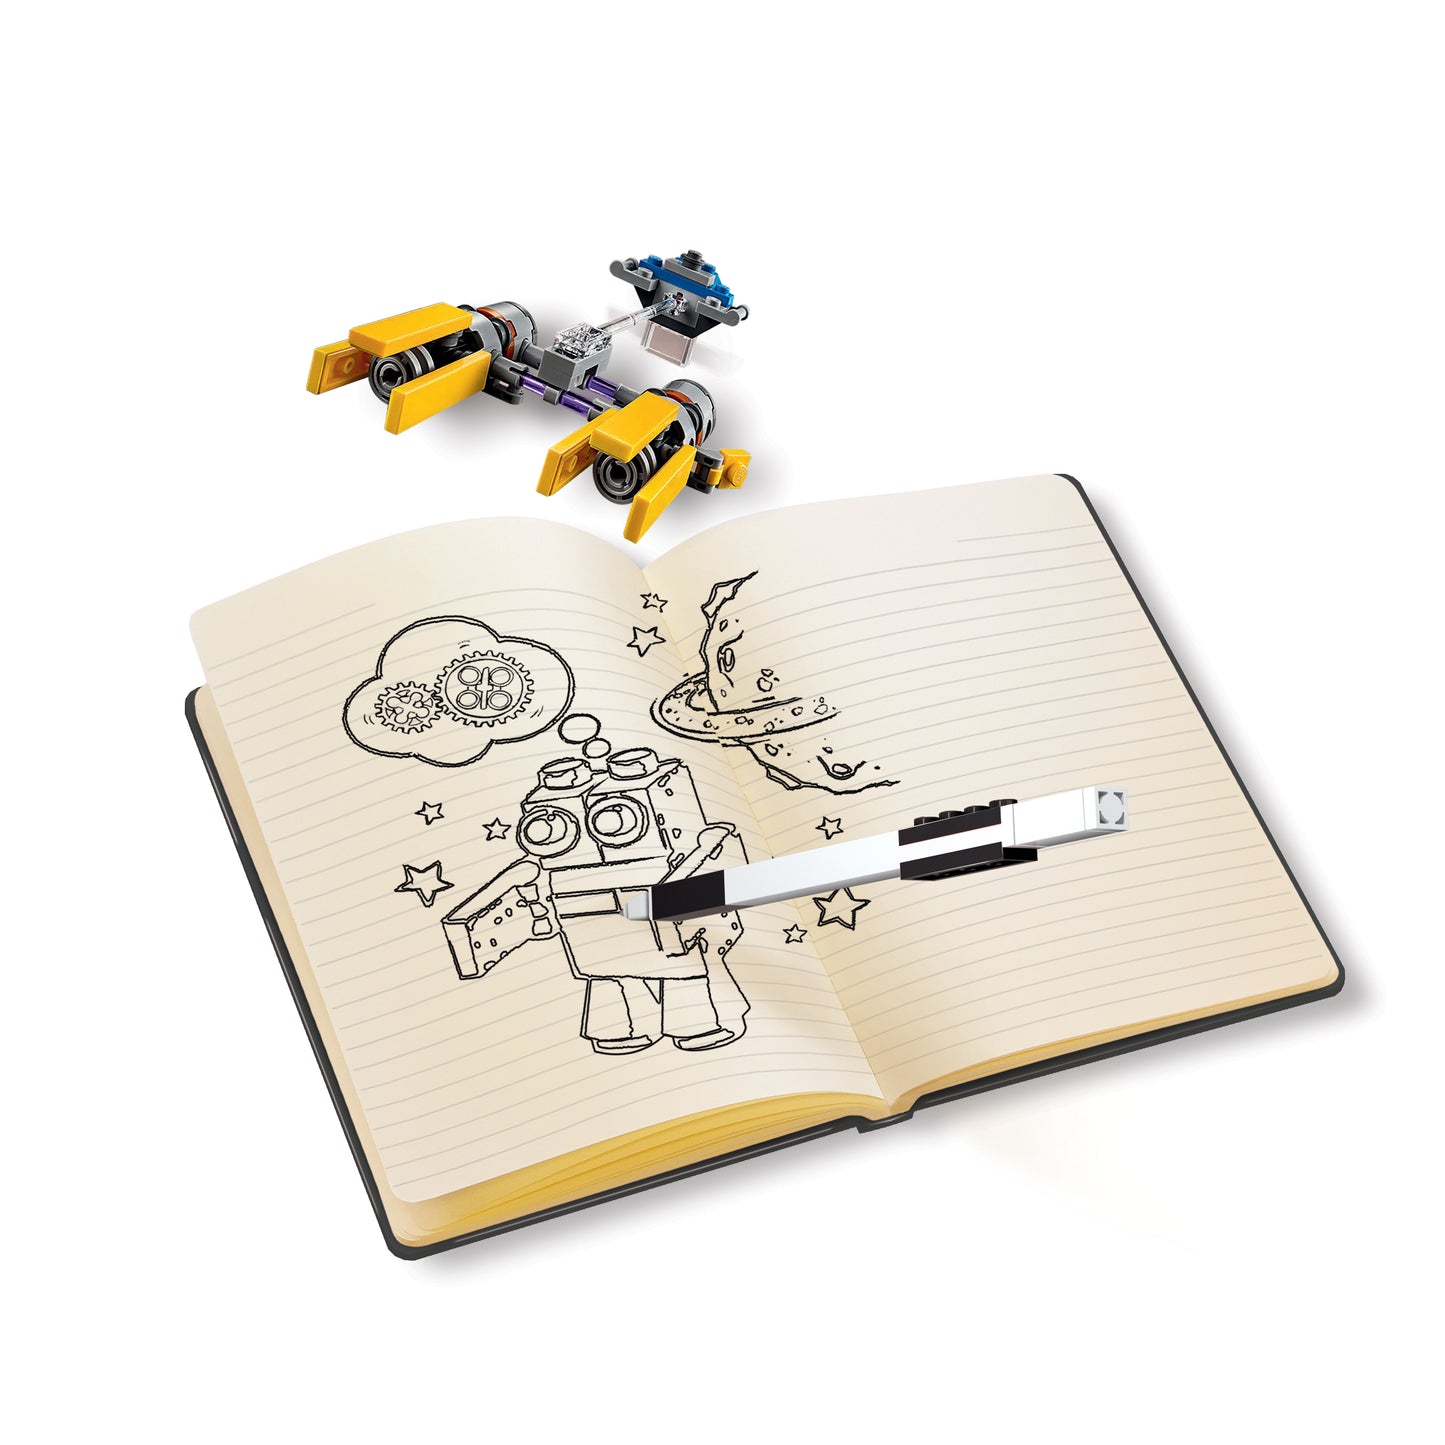 IQ LEGO® STAR WARS 2.0 Podracer Recruitment Bag Stationery Set (52527)